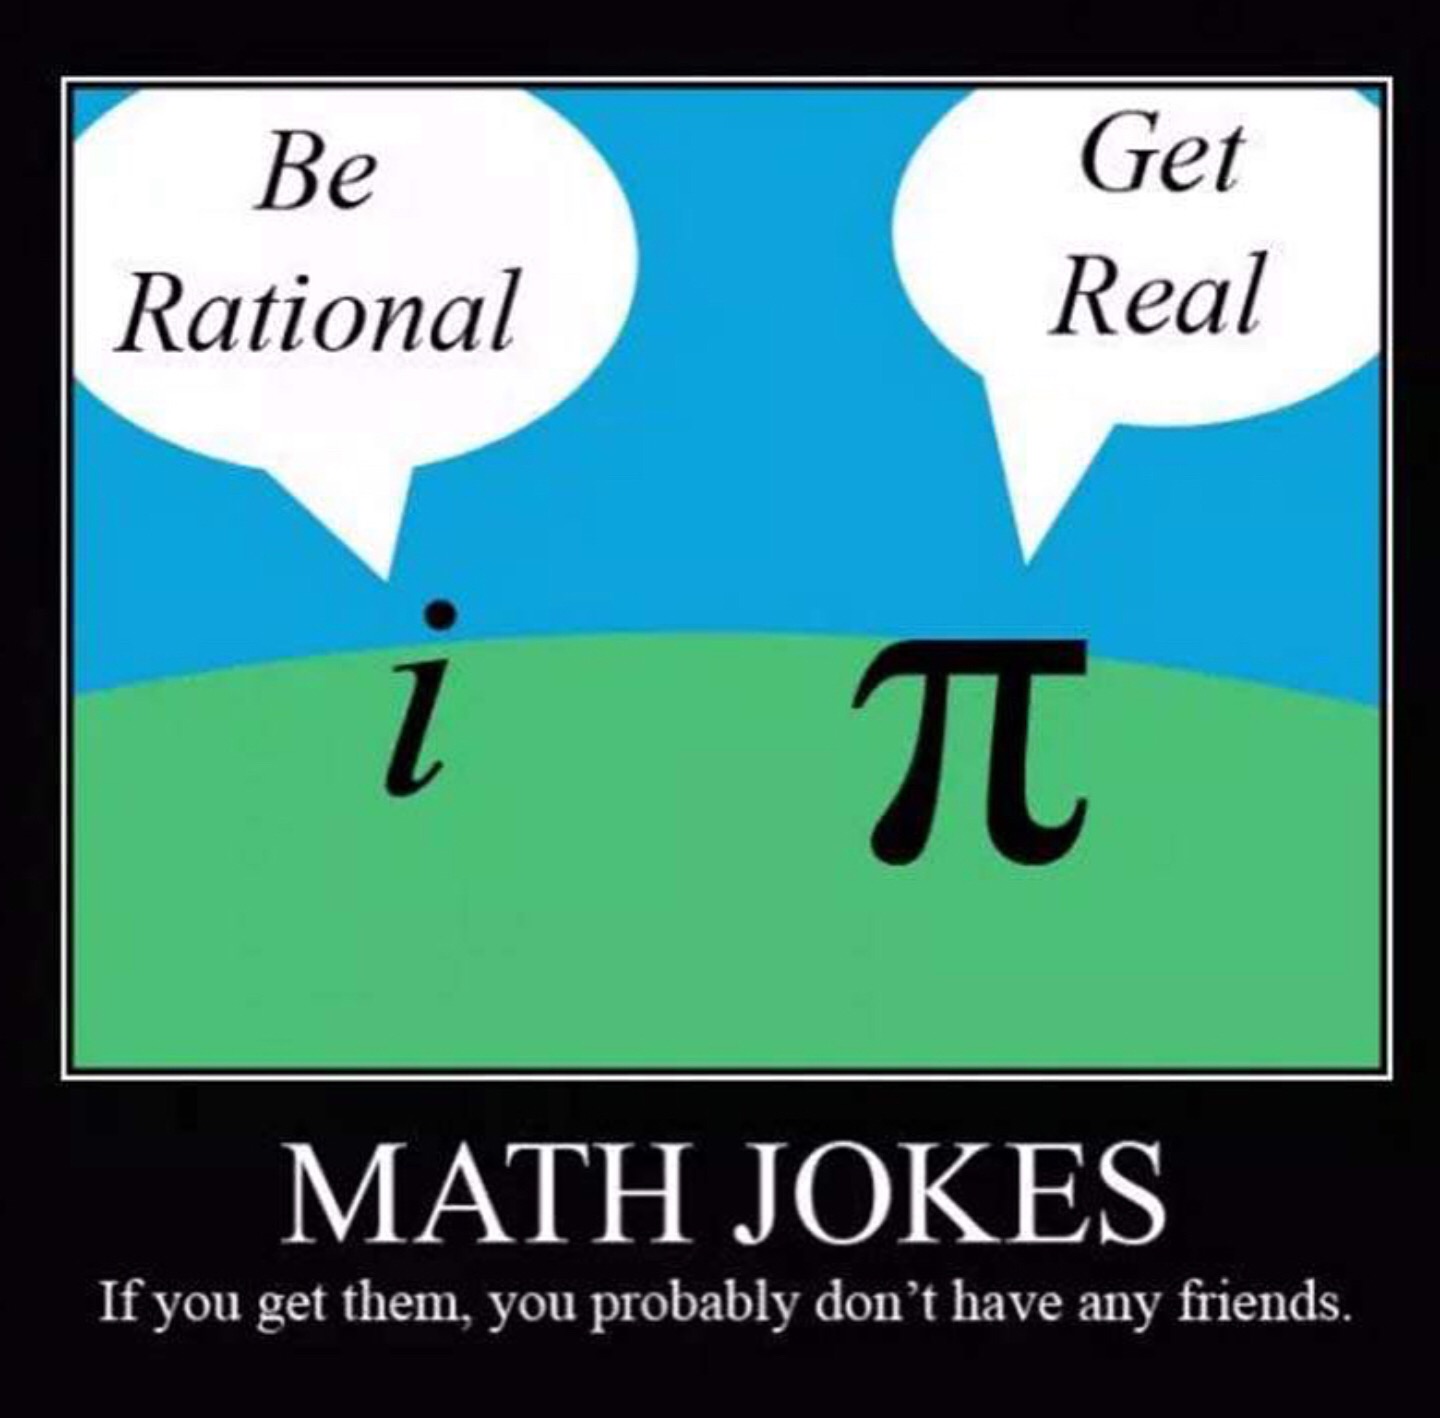 They get really well. Math jokes. Математические шутки. Математические шутки и приколы. Be Rational get real.